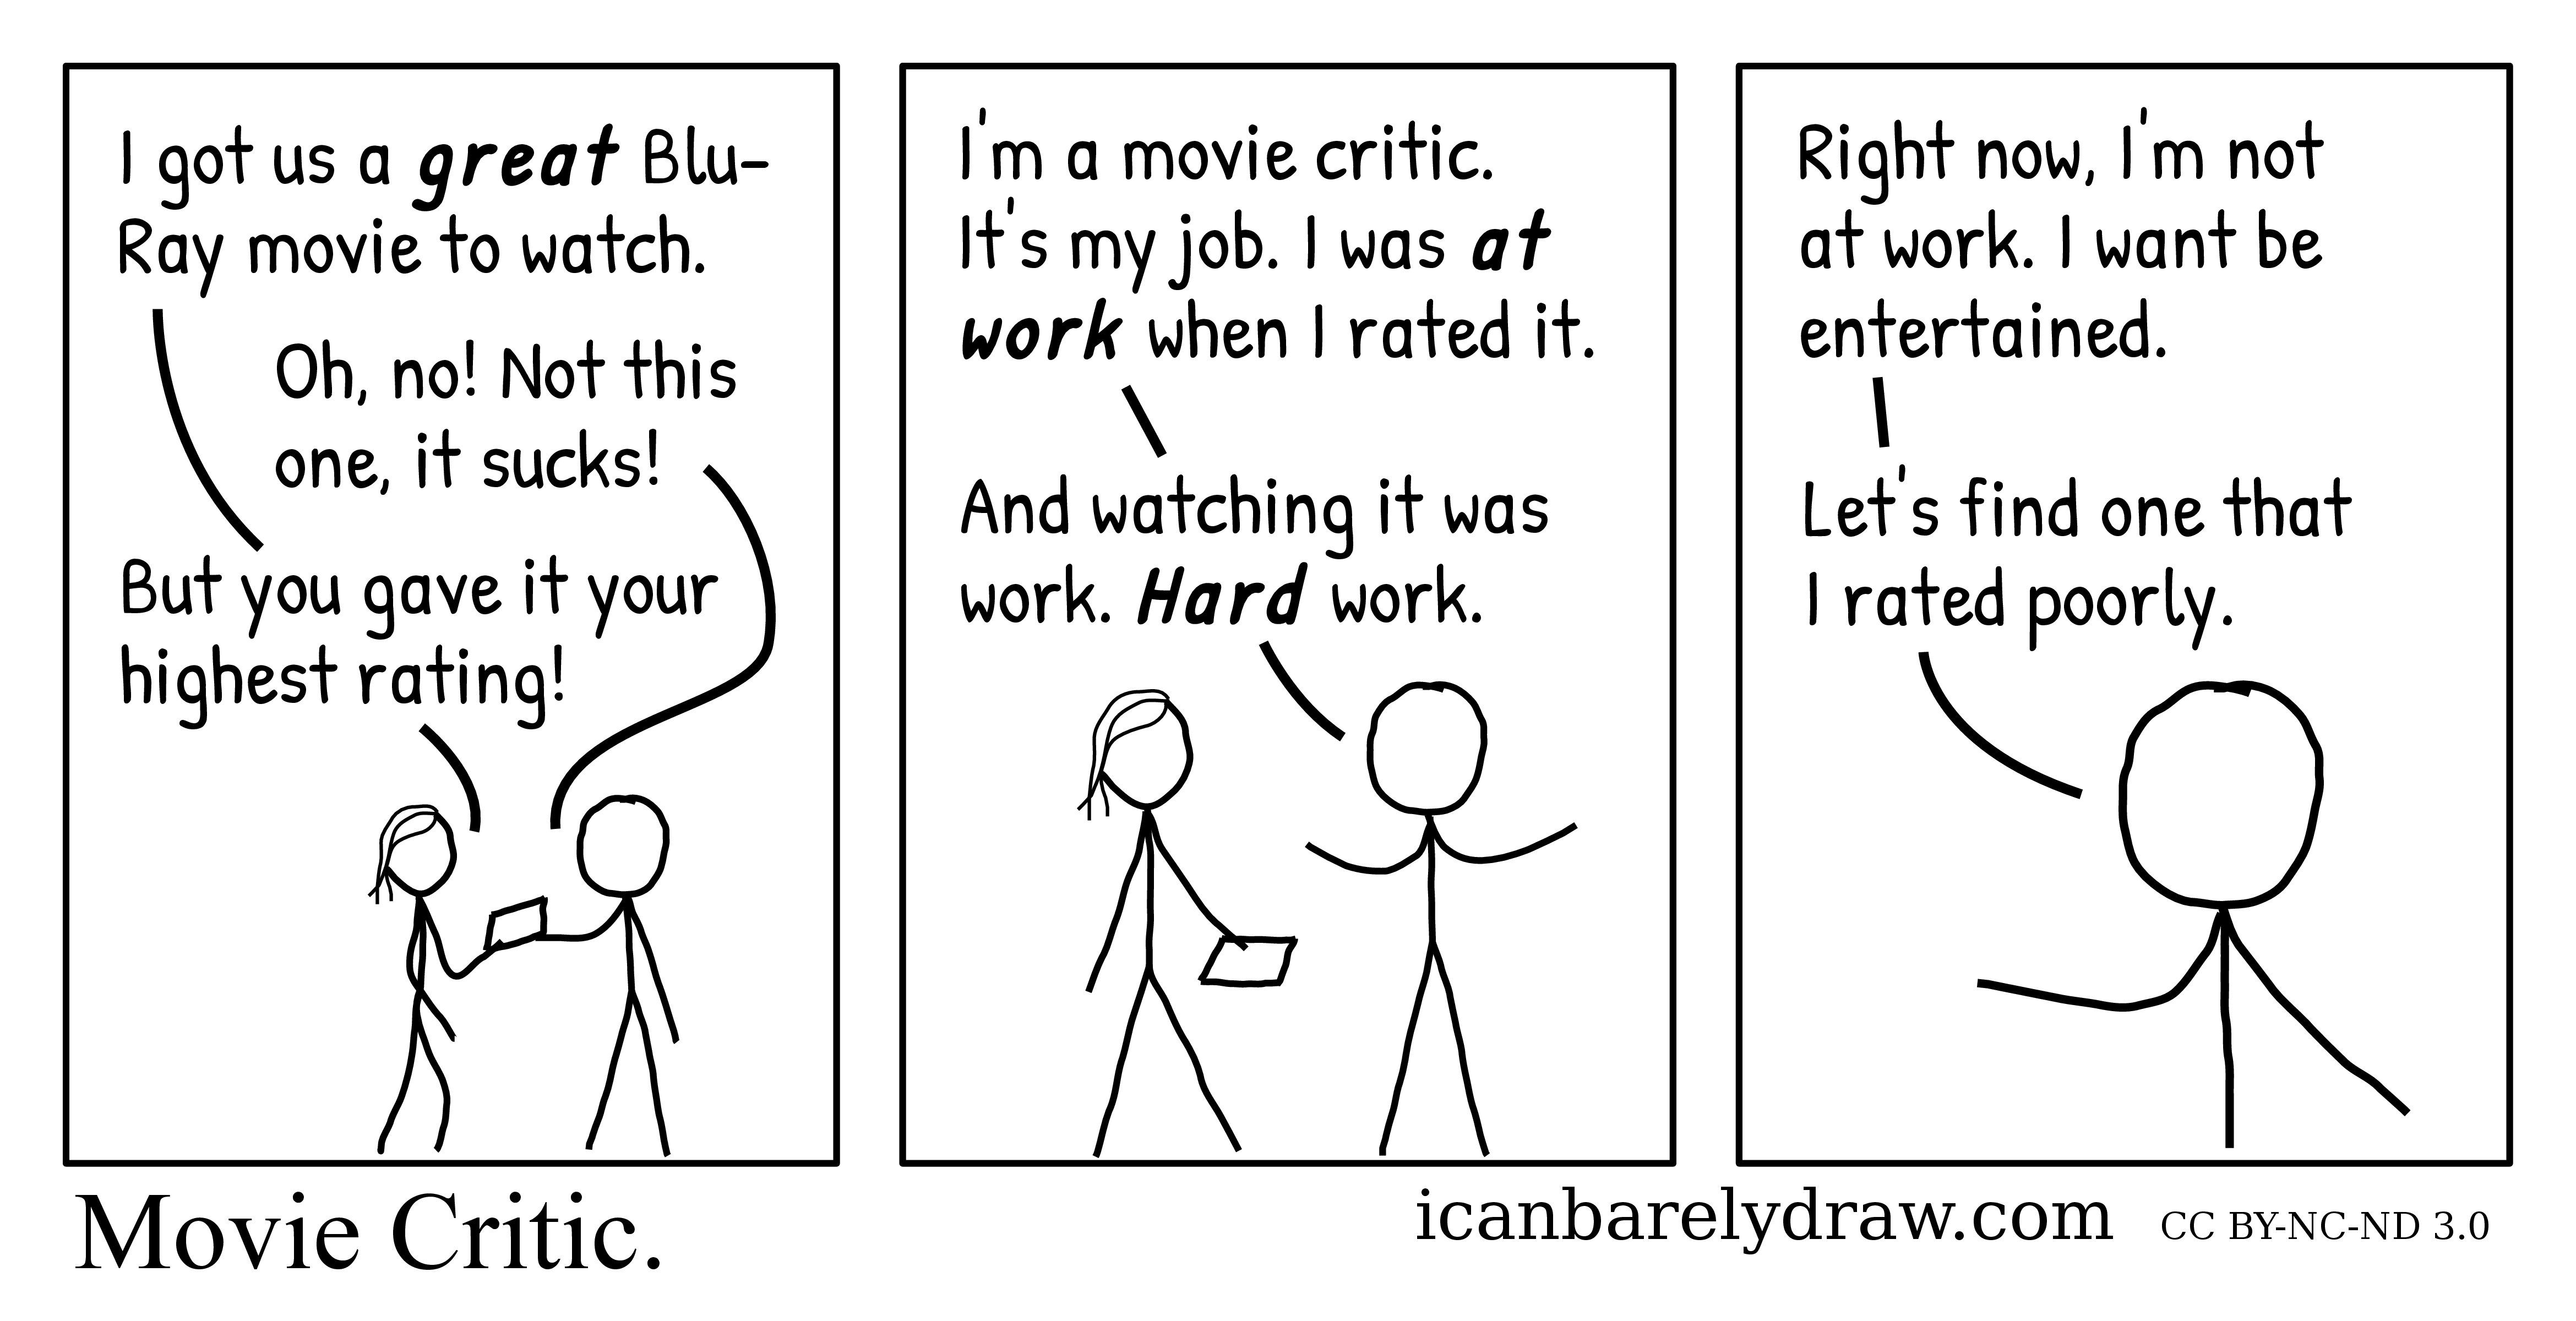 Movie critic